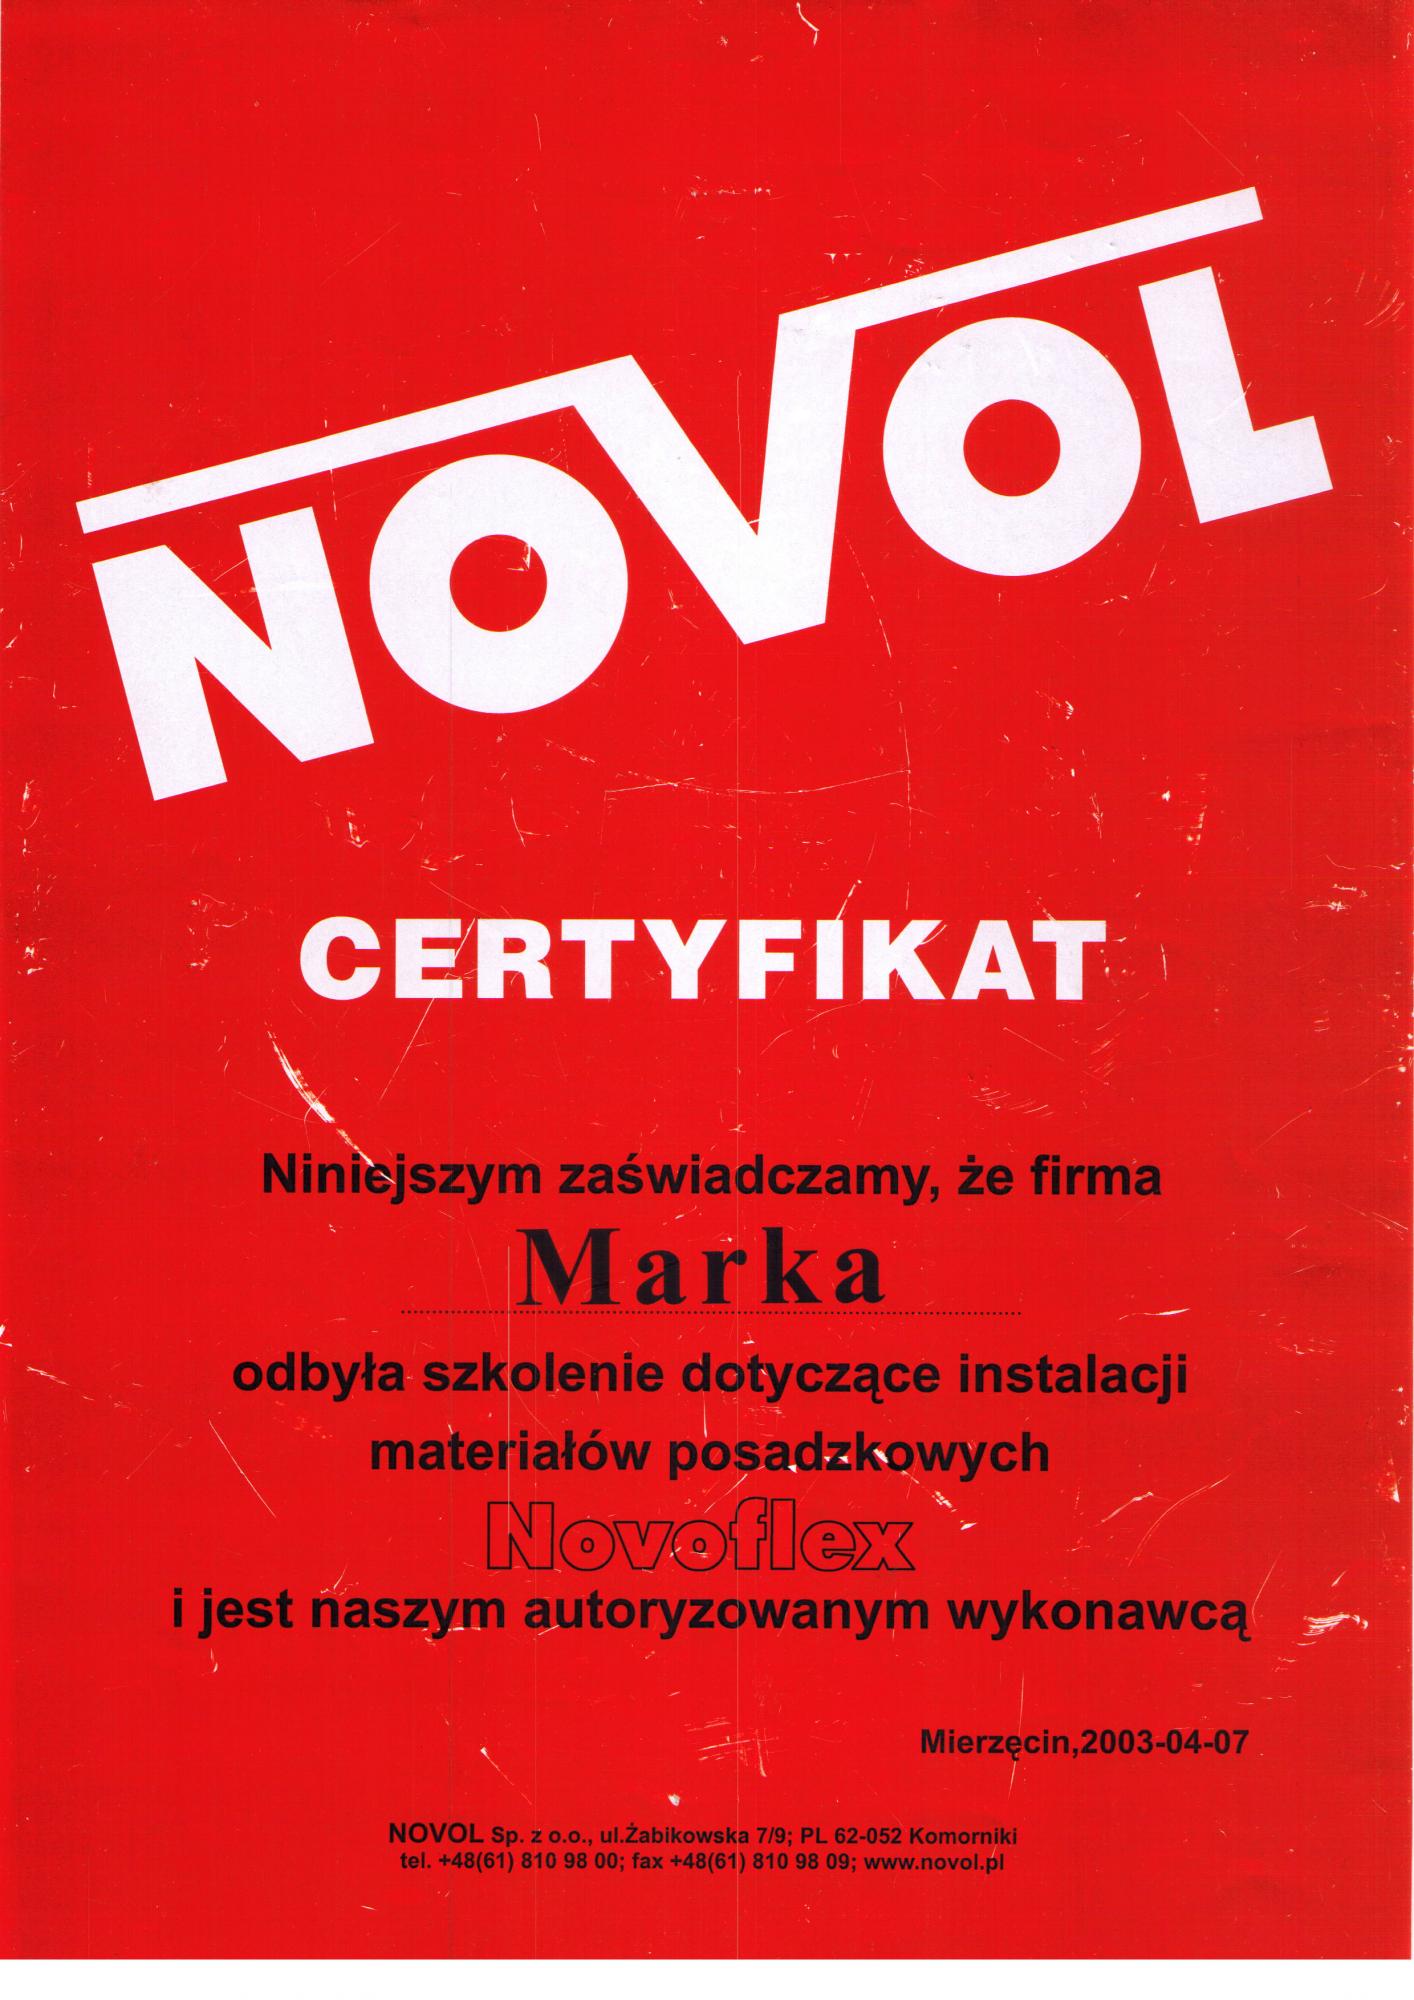 Certyfikat novol 2003